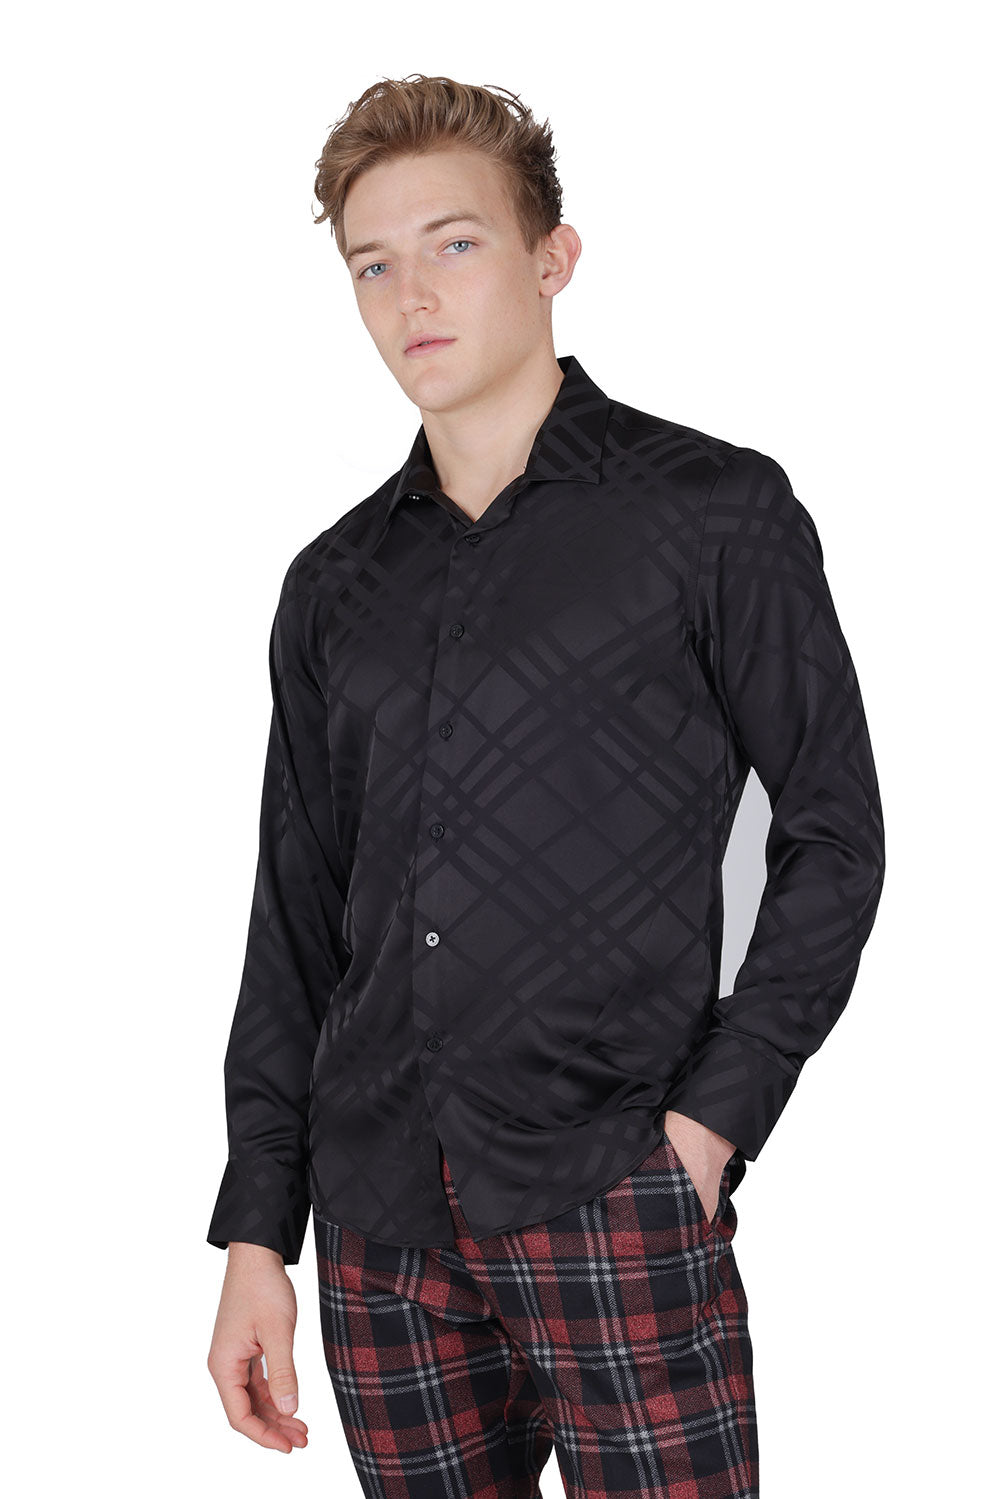 Barabas Men's Textured Diamond Geometric button down dress shirts B319 Black